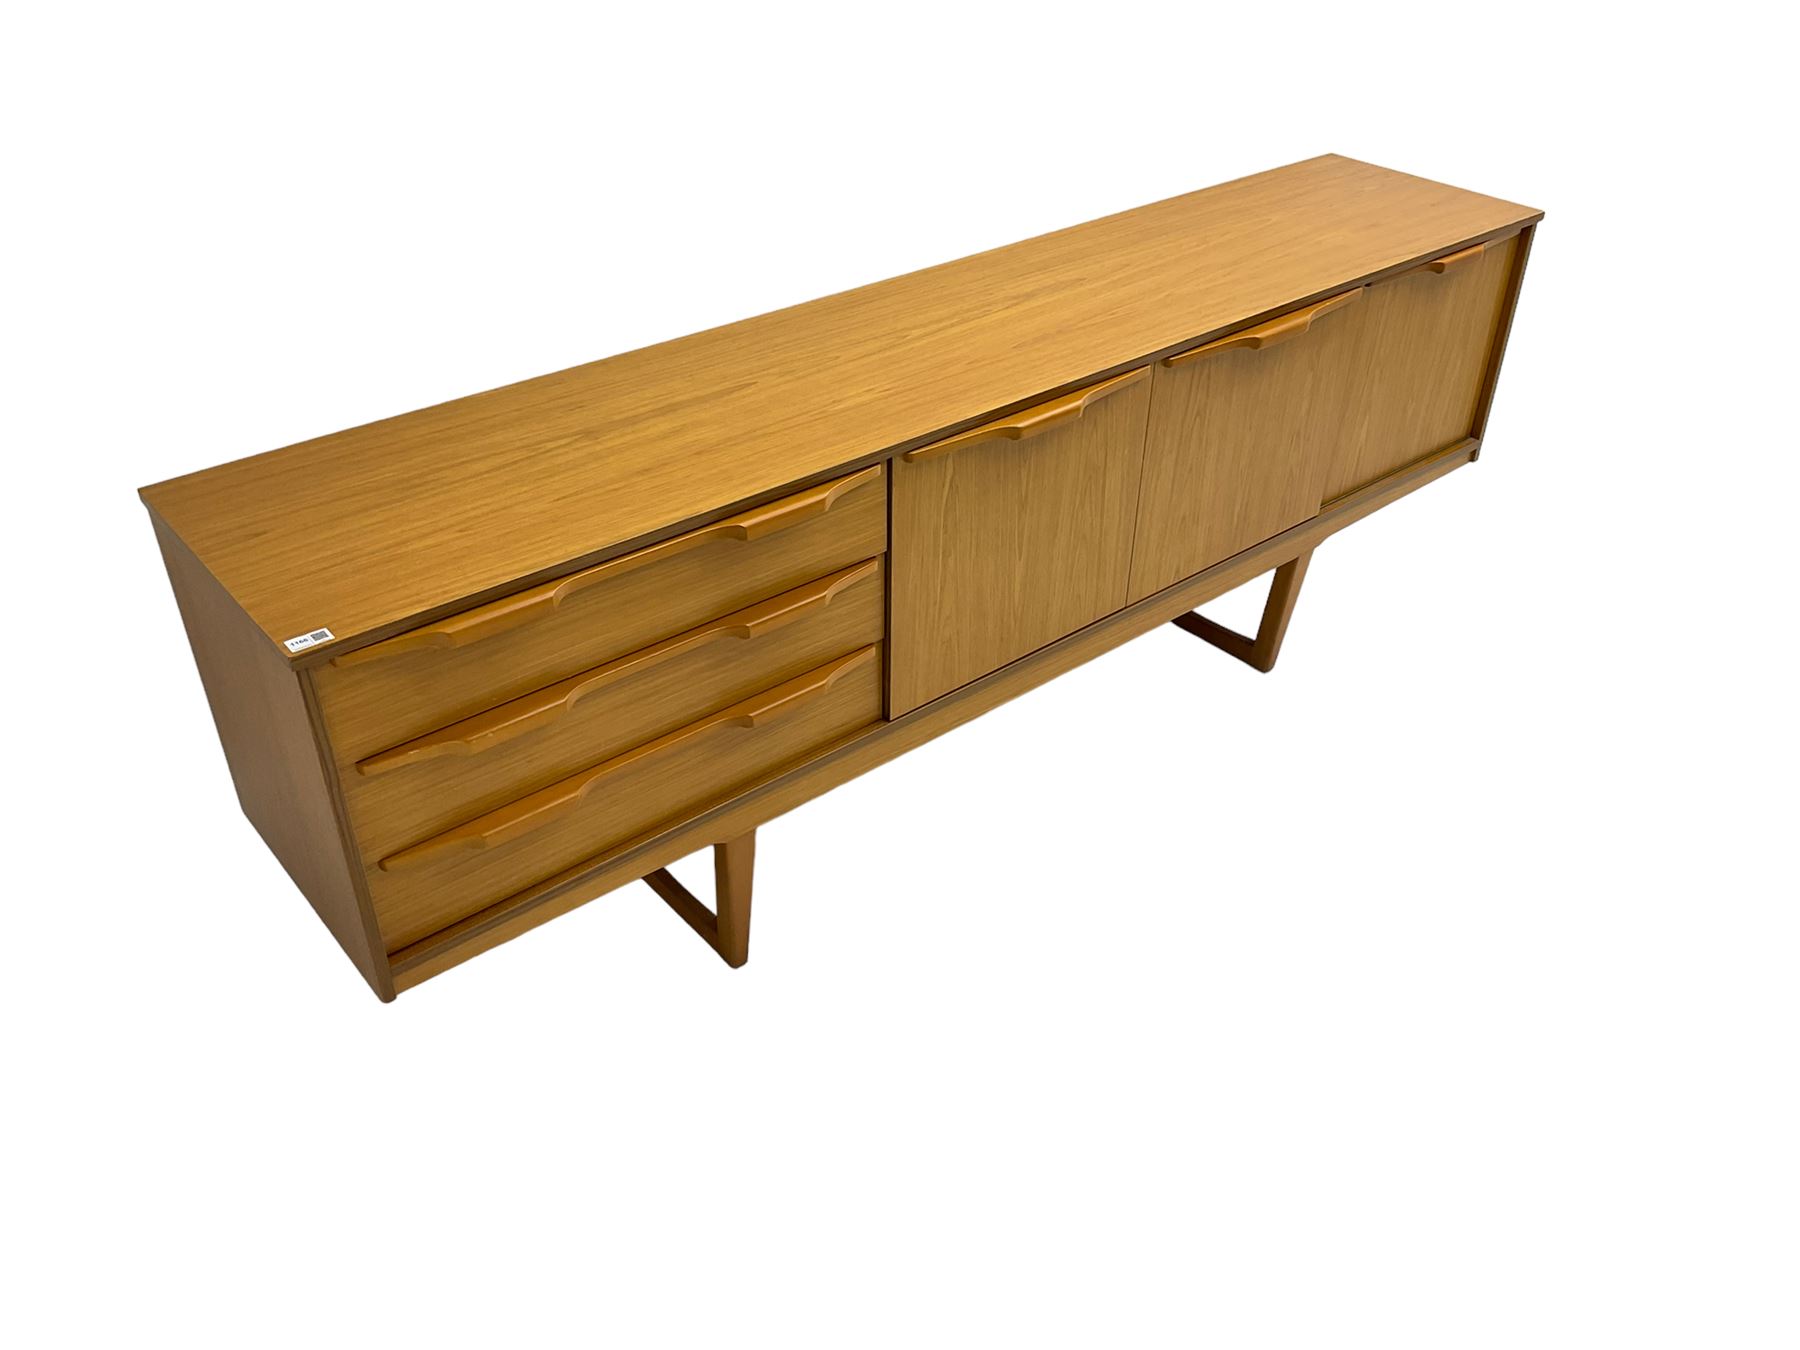 Stonehill Furniture (SF) Ltd - mid-20th century teak sideboard - Image 3 of 7